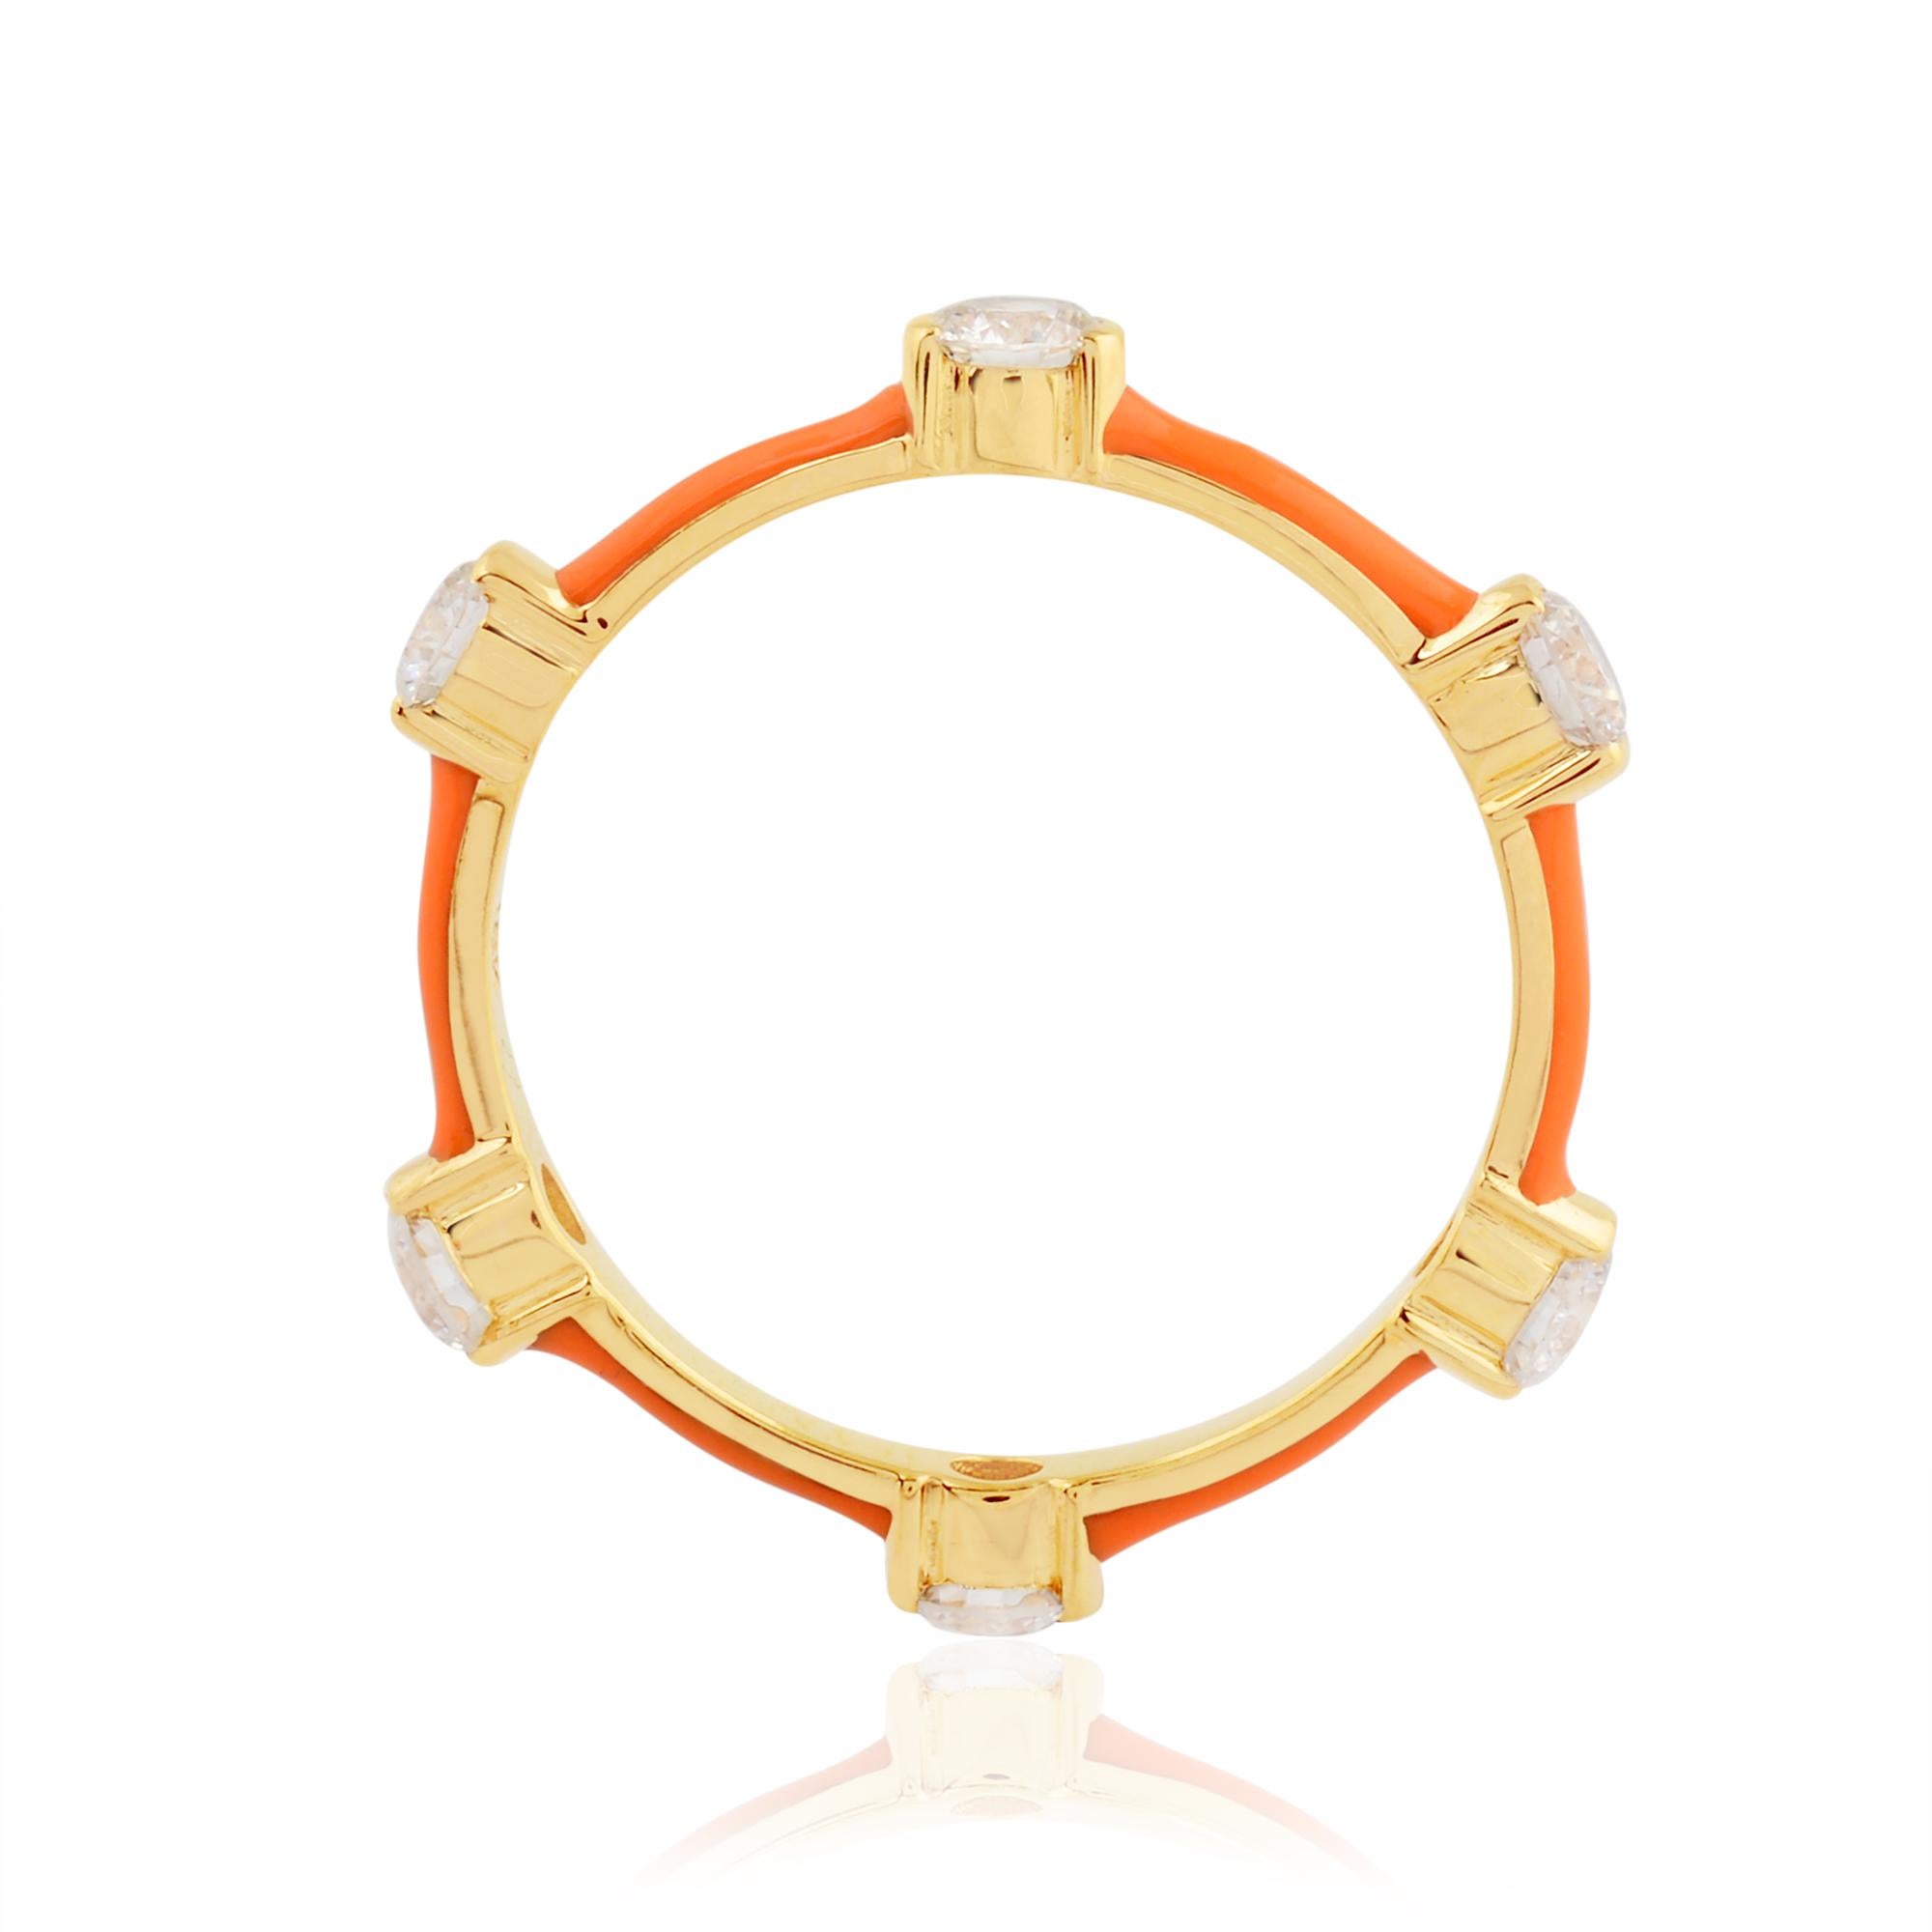 For Sale:  0.76 Carat Diamond Orange Enamel Band Ring Solid 18k Yellow Gold Fine Jewelry 3